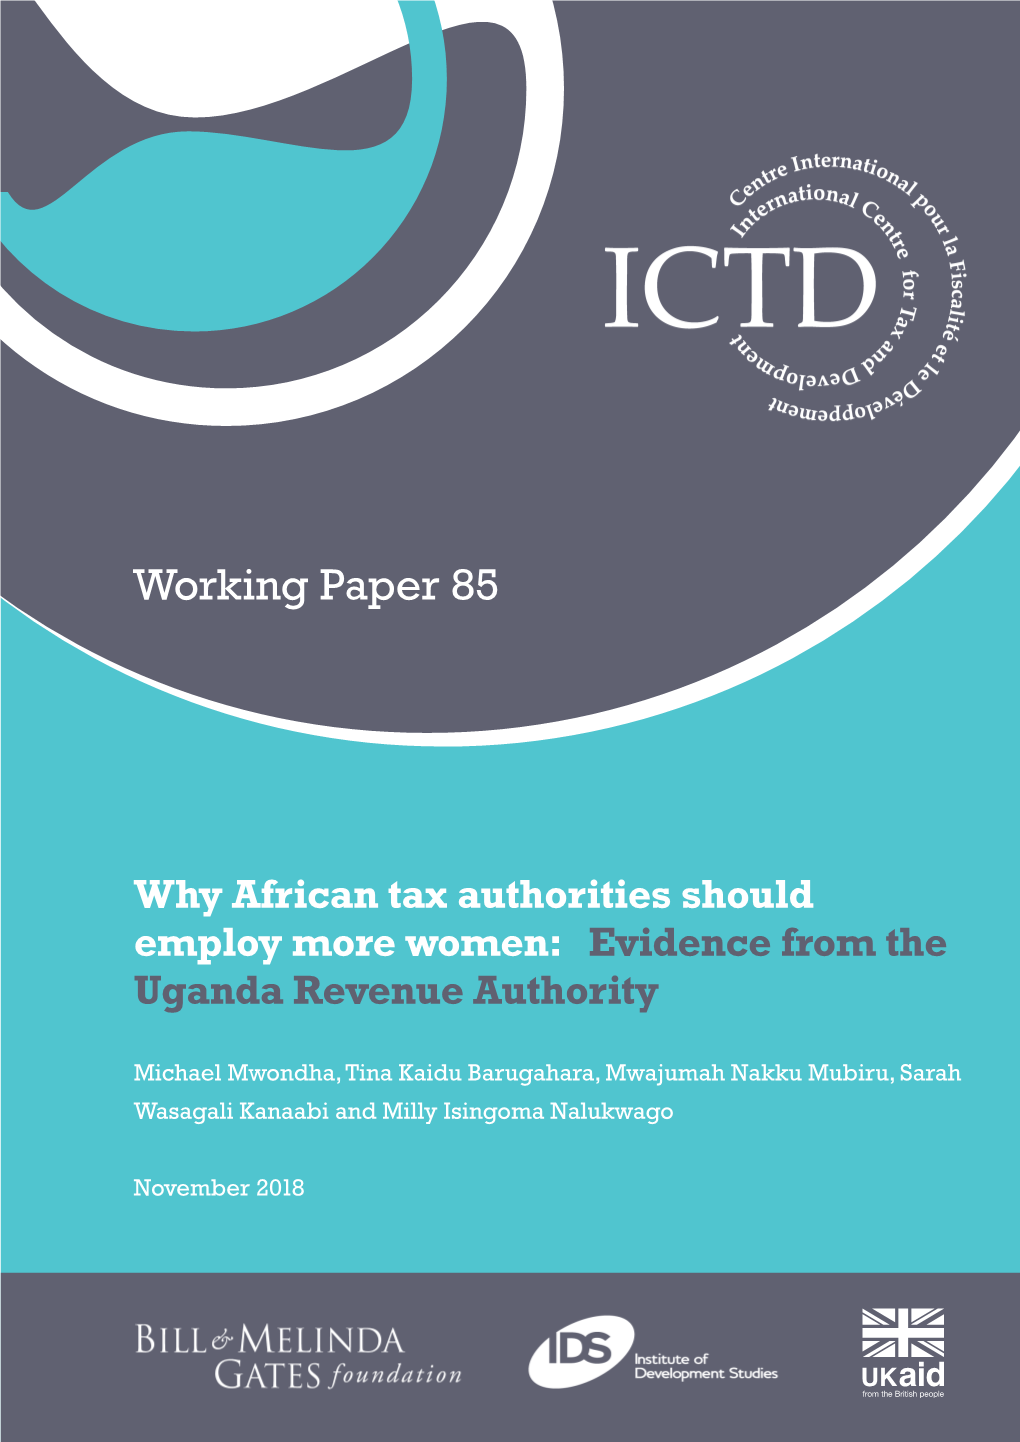 Evidence from the Uganda Revenue Authority